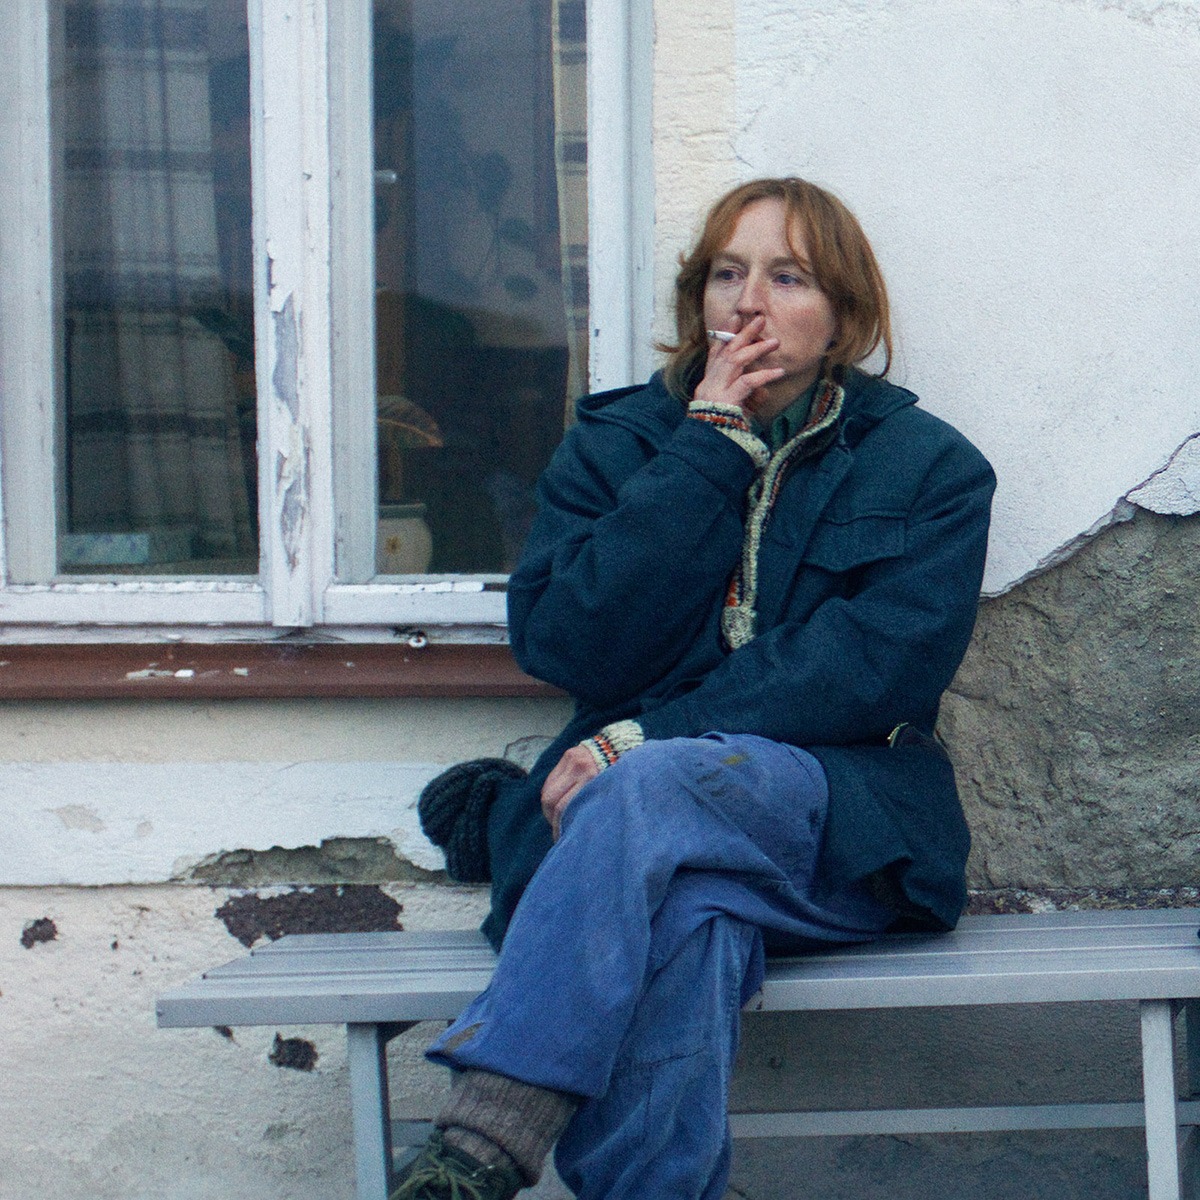 A woman sitting on a bench smoking a cigarette.